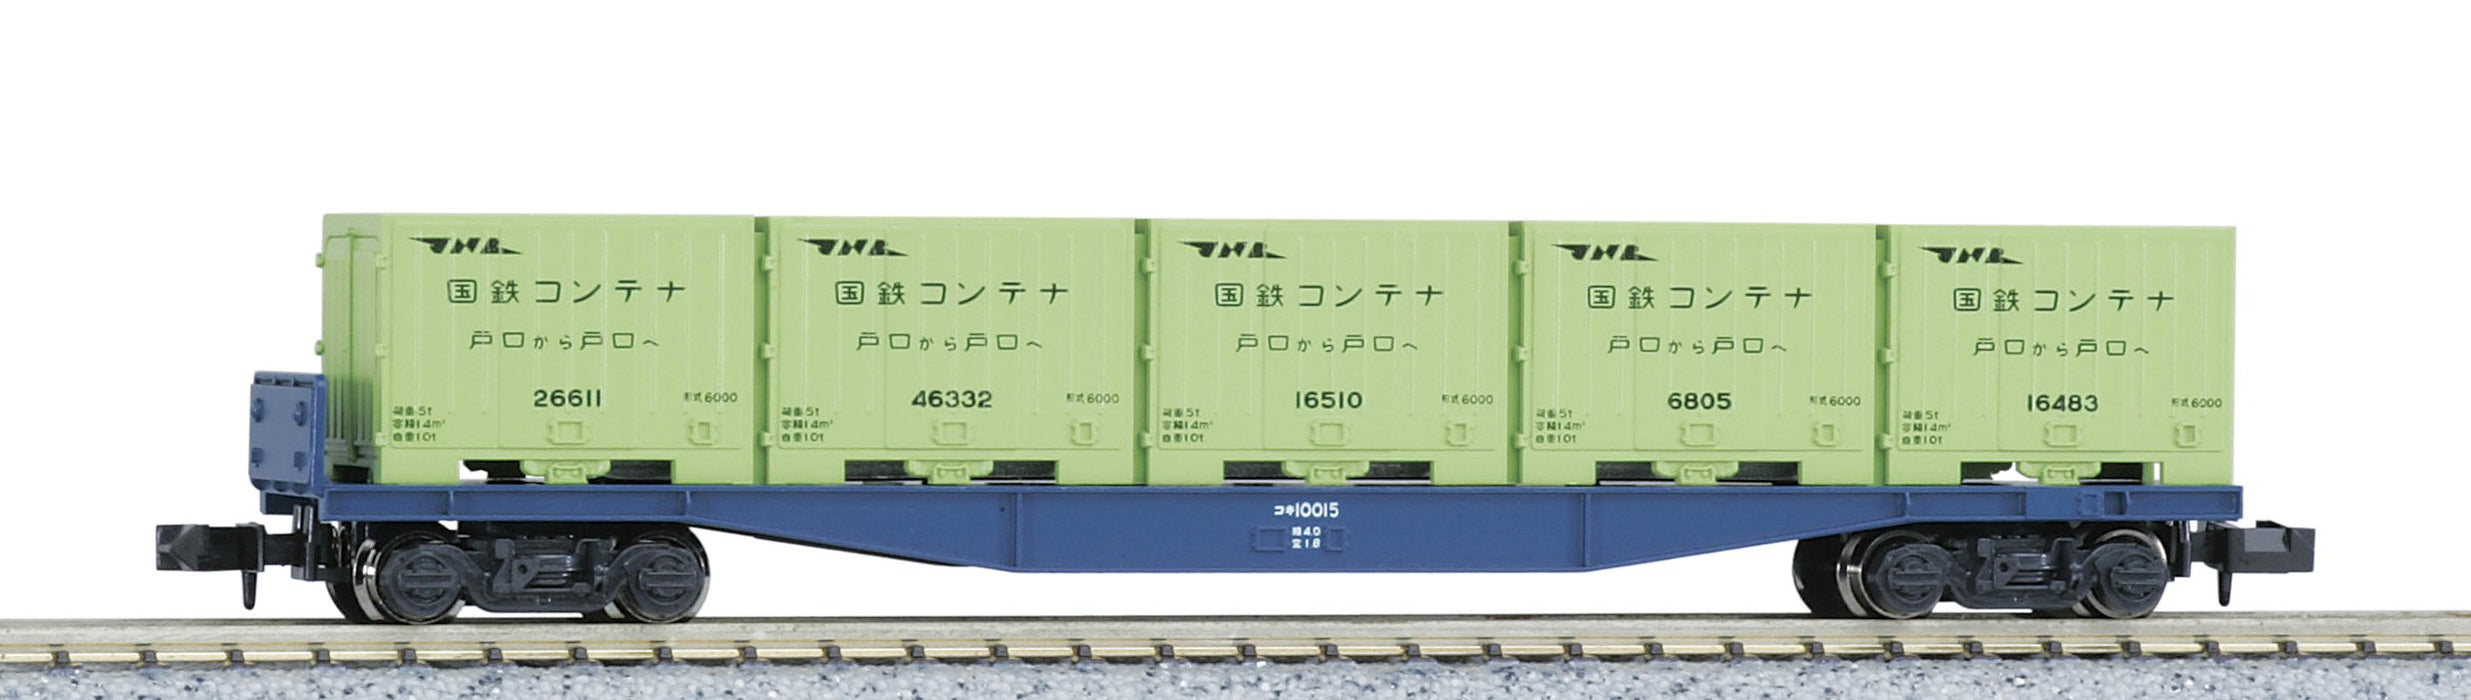 Kato N Gauge Koki10000 8002 Freight Car - Premium Railway Model